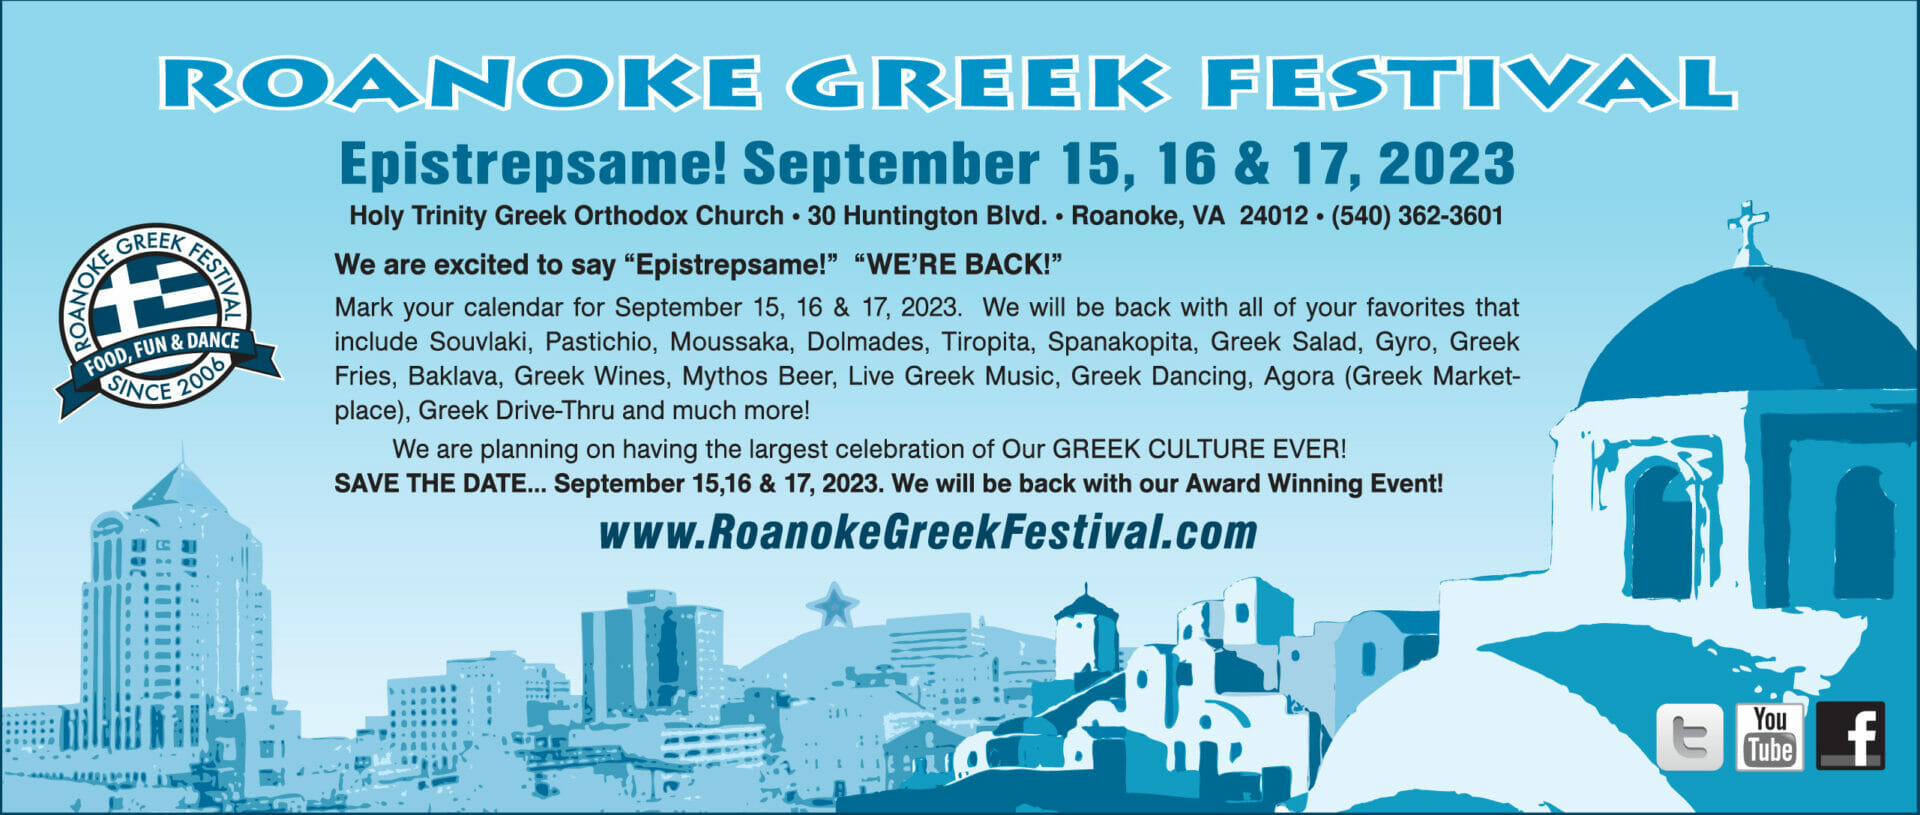 Roanoke Greek Festival LYH Lynchburg Tourism